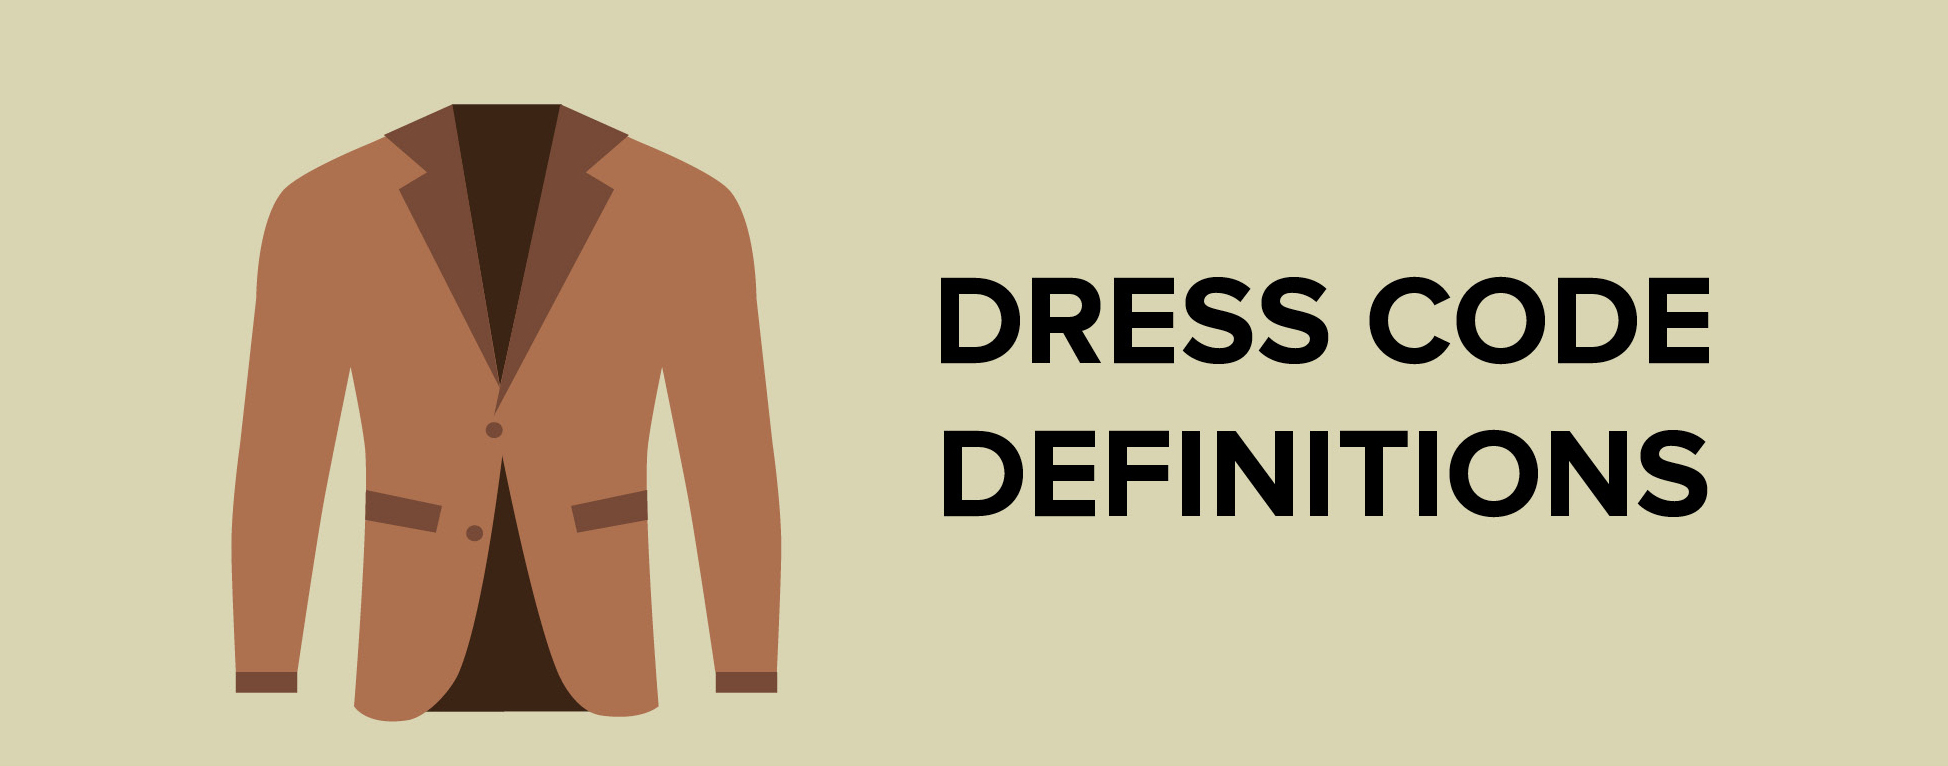 dress code definitions.jpg